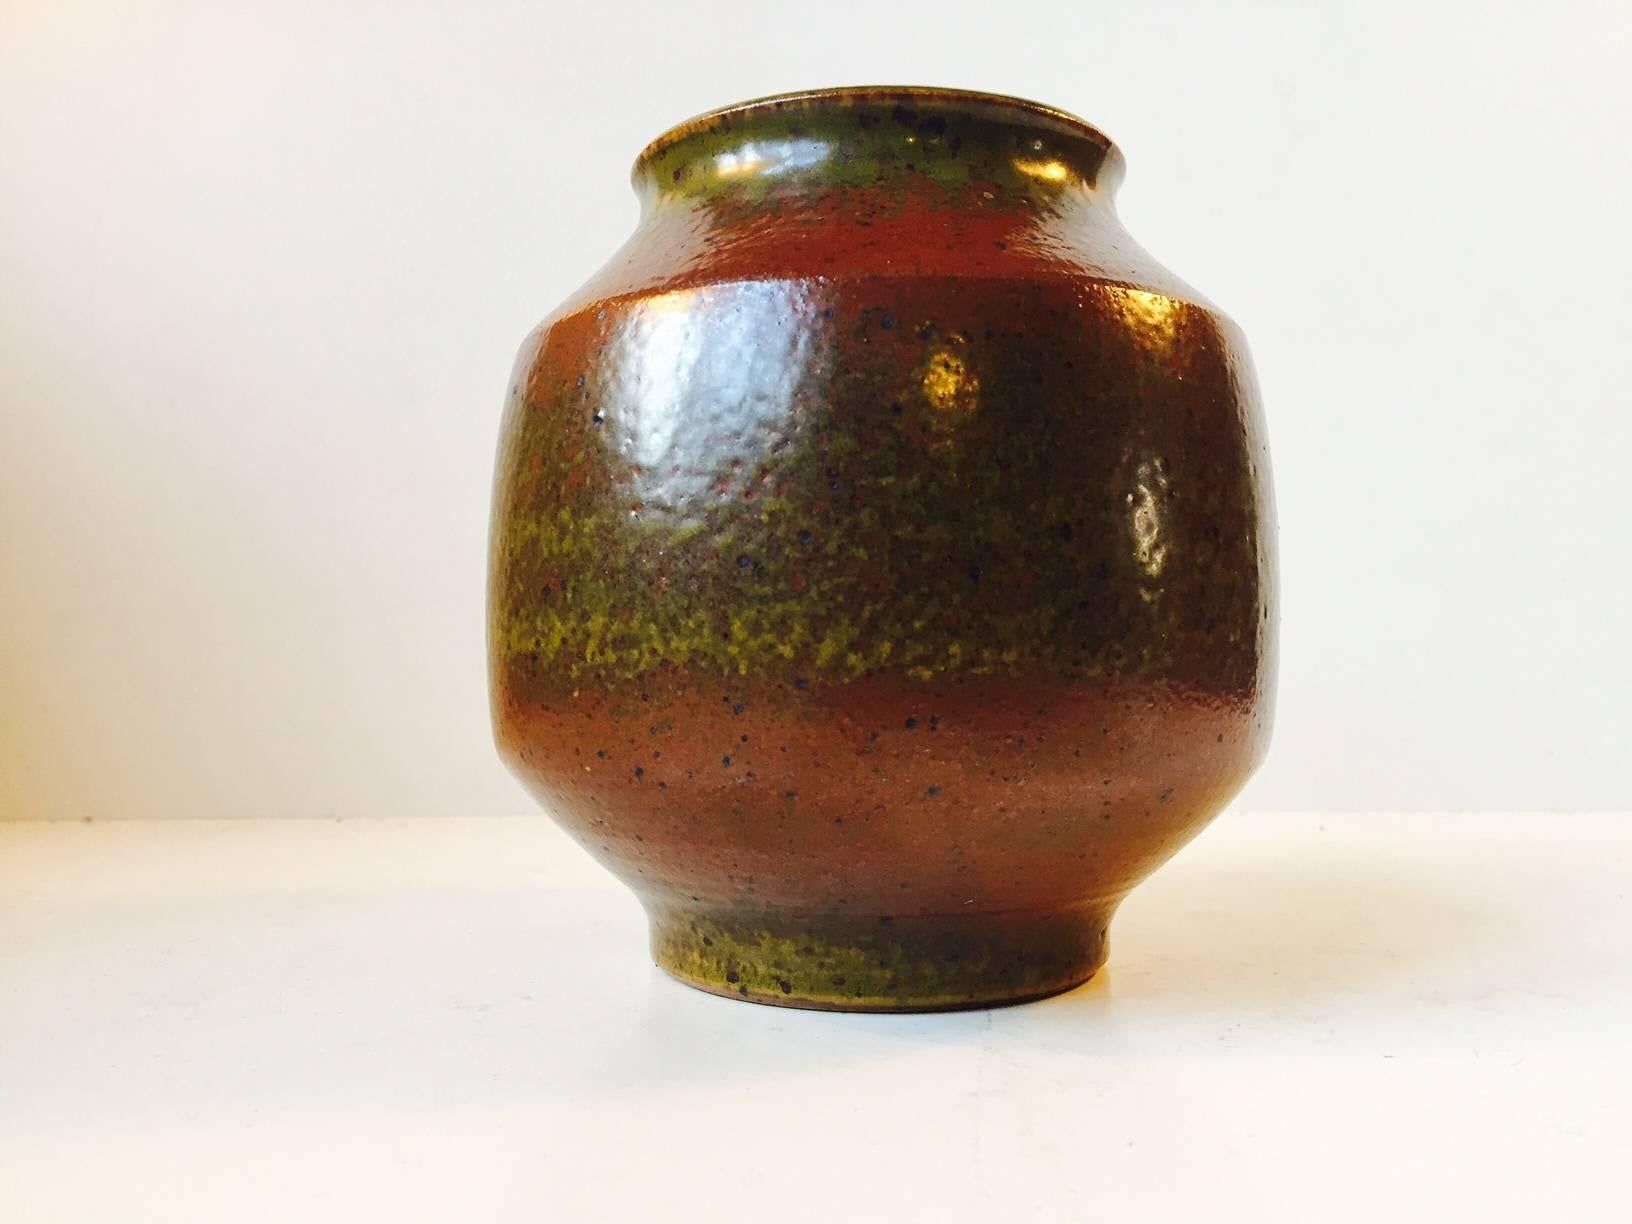 Glazed Stoneware Vase by Female Danish Ceramist Marianne Starck for M. Andersen In Good Condition For Sale In Esbjerg, DK